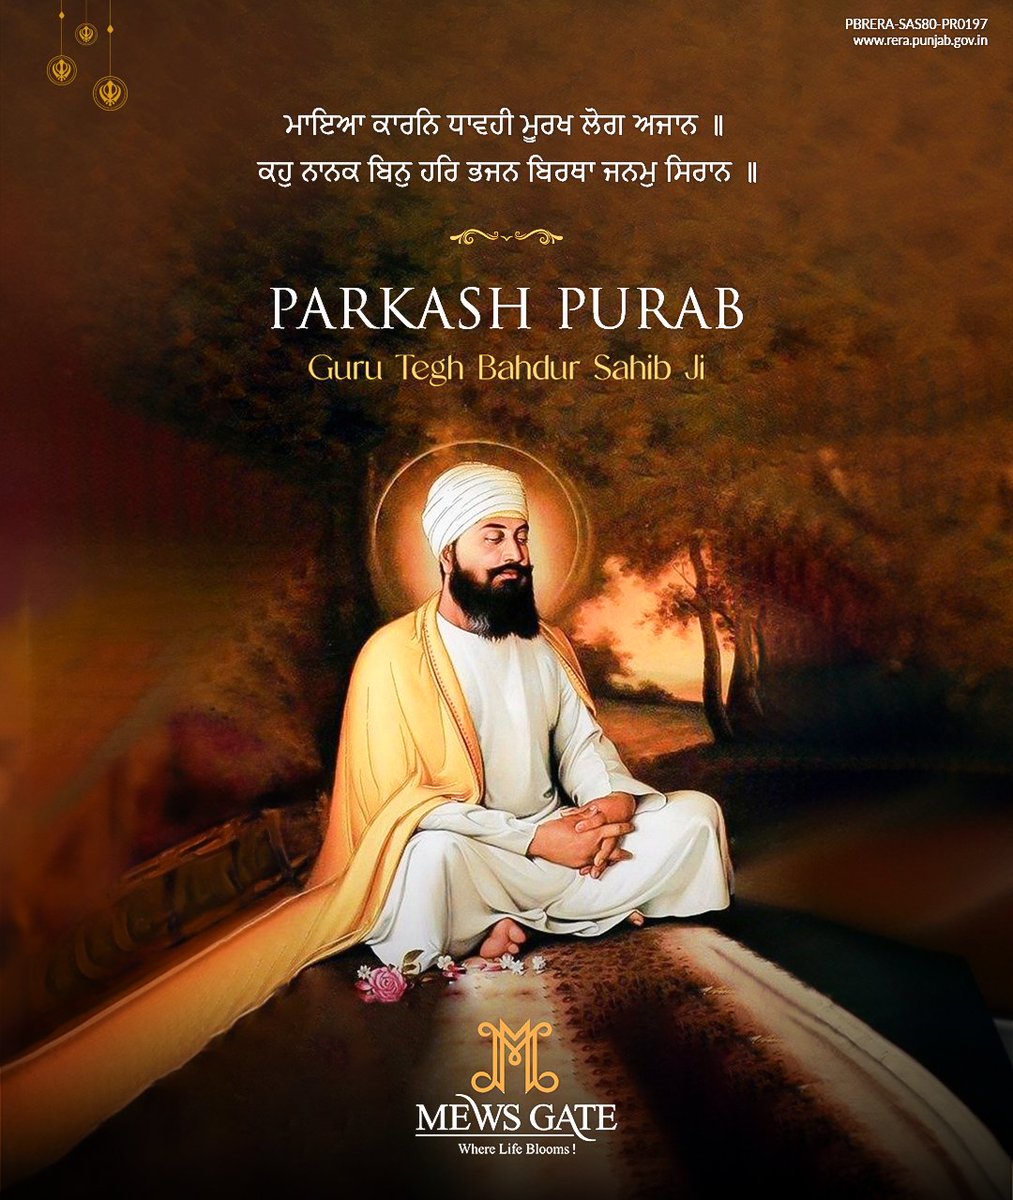 May his divine wisdom and teachings inspire us to walk the path of righteousness and harmony. Prakash Purab Guru Tegh Bahadur Sahib Ji ! #MewsGate #PrakashPurab #GuruTeghBahadurSahibJi #SikhGuru #Sikhism #Harmony #Truth #DivineLight #SpiritualJourney #Culture #DivineWisdom